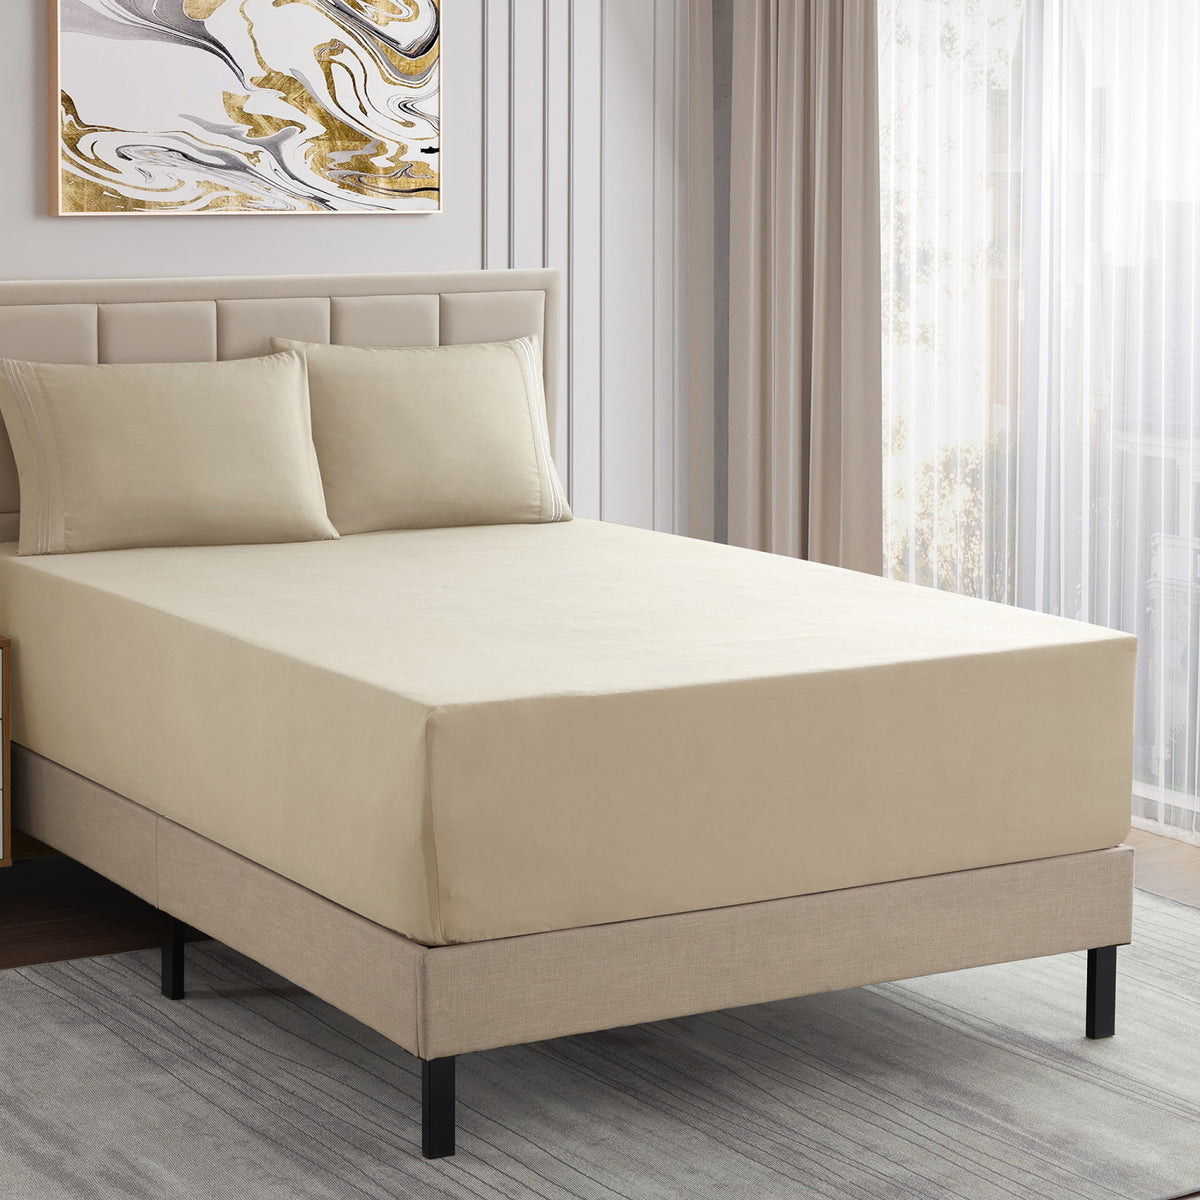 Extra Deep 4-Piece Bed Sheet Set Beige - Bed